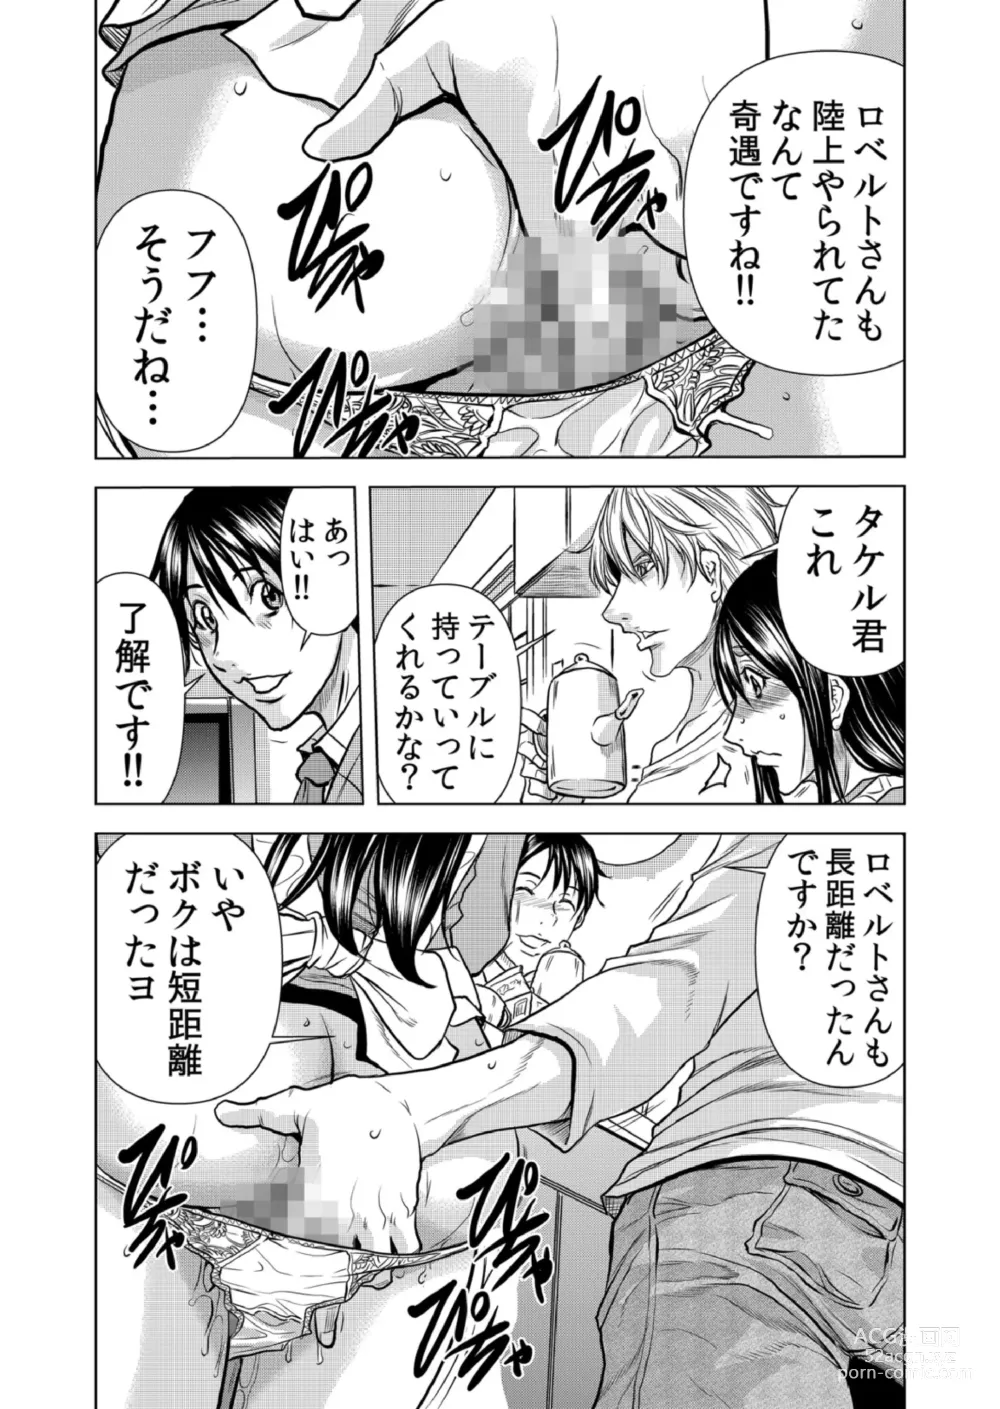 Page 8 of manga Mamasan,yobai ha OK desuka? VOL9